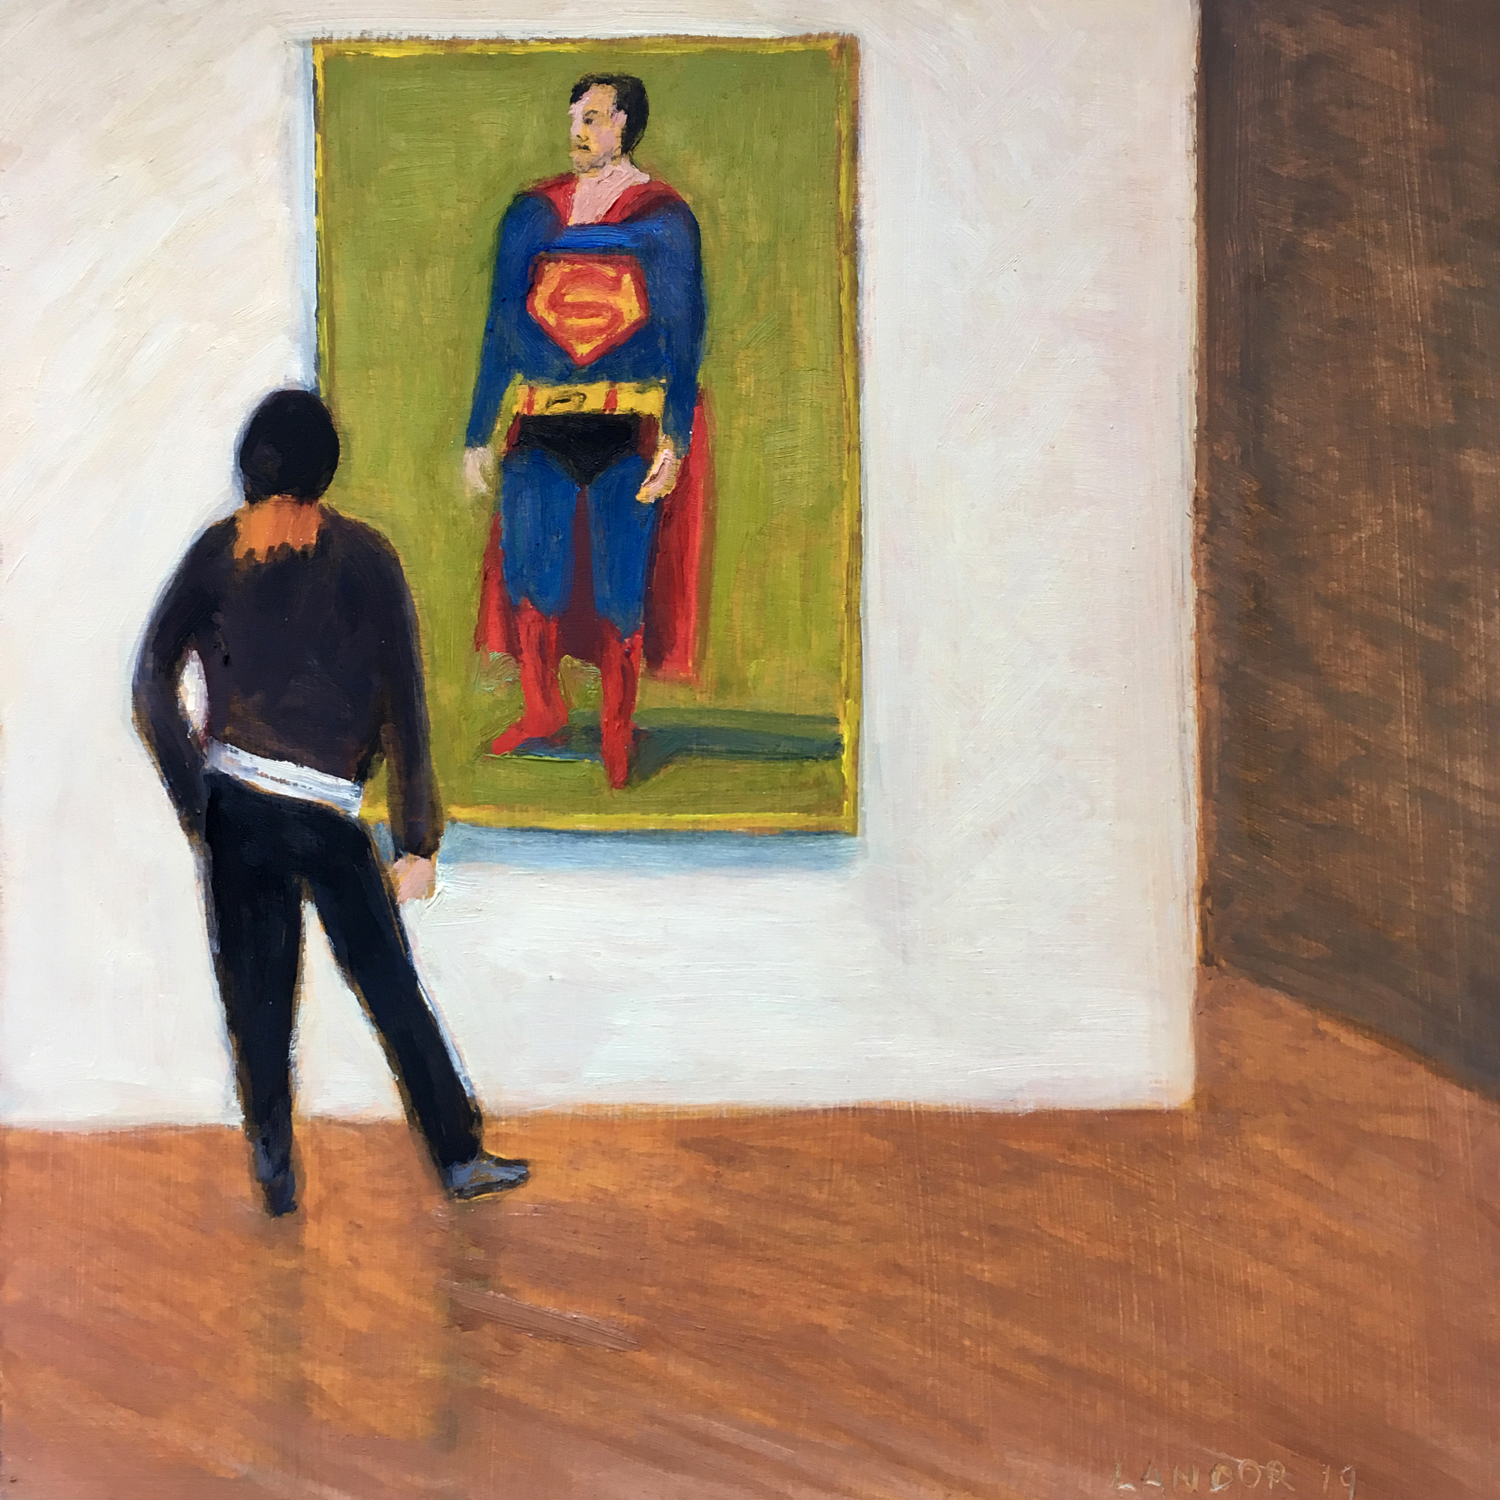 Superwoman Studies Superman